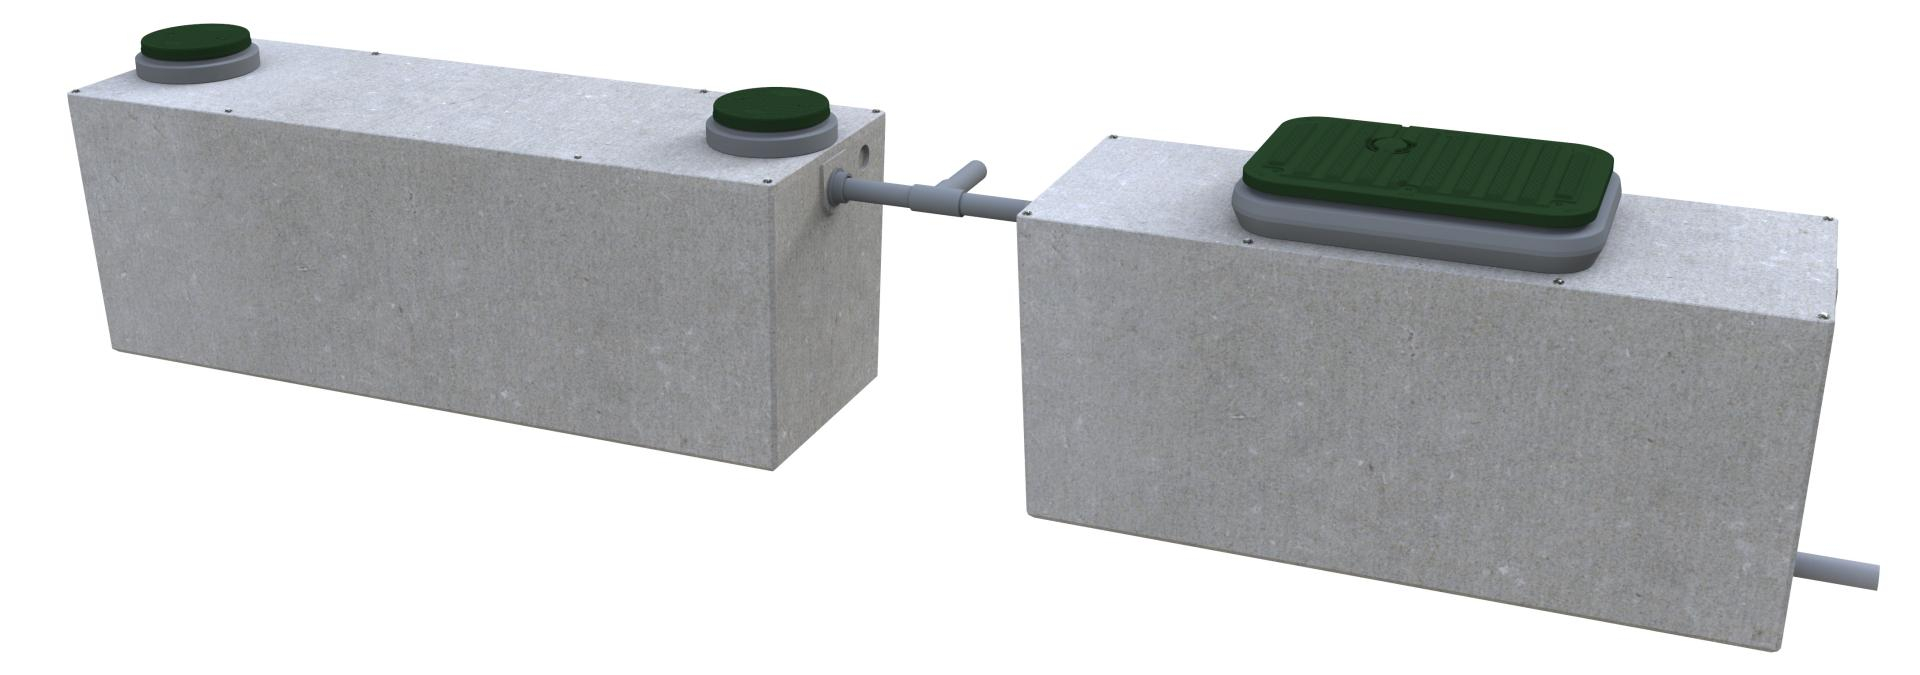 filiere-coco-ecoflo-beton-5eh-sortie-haute-premier-tech-0